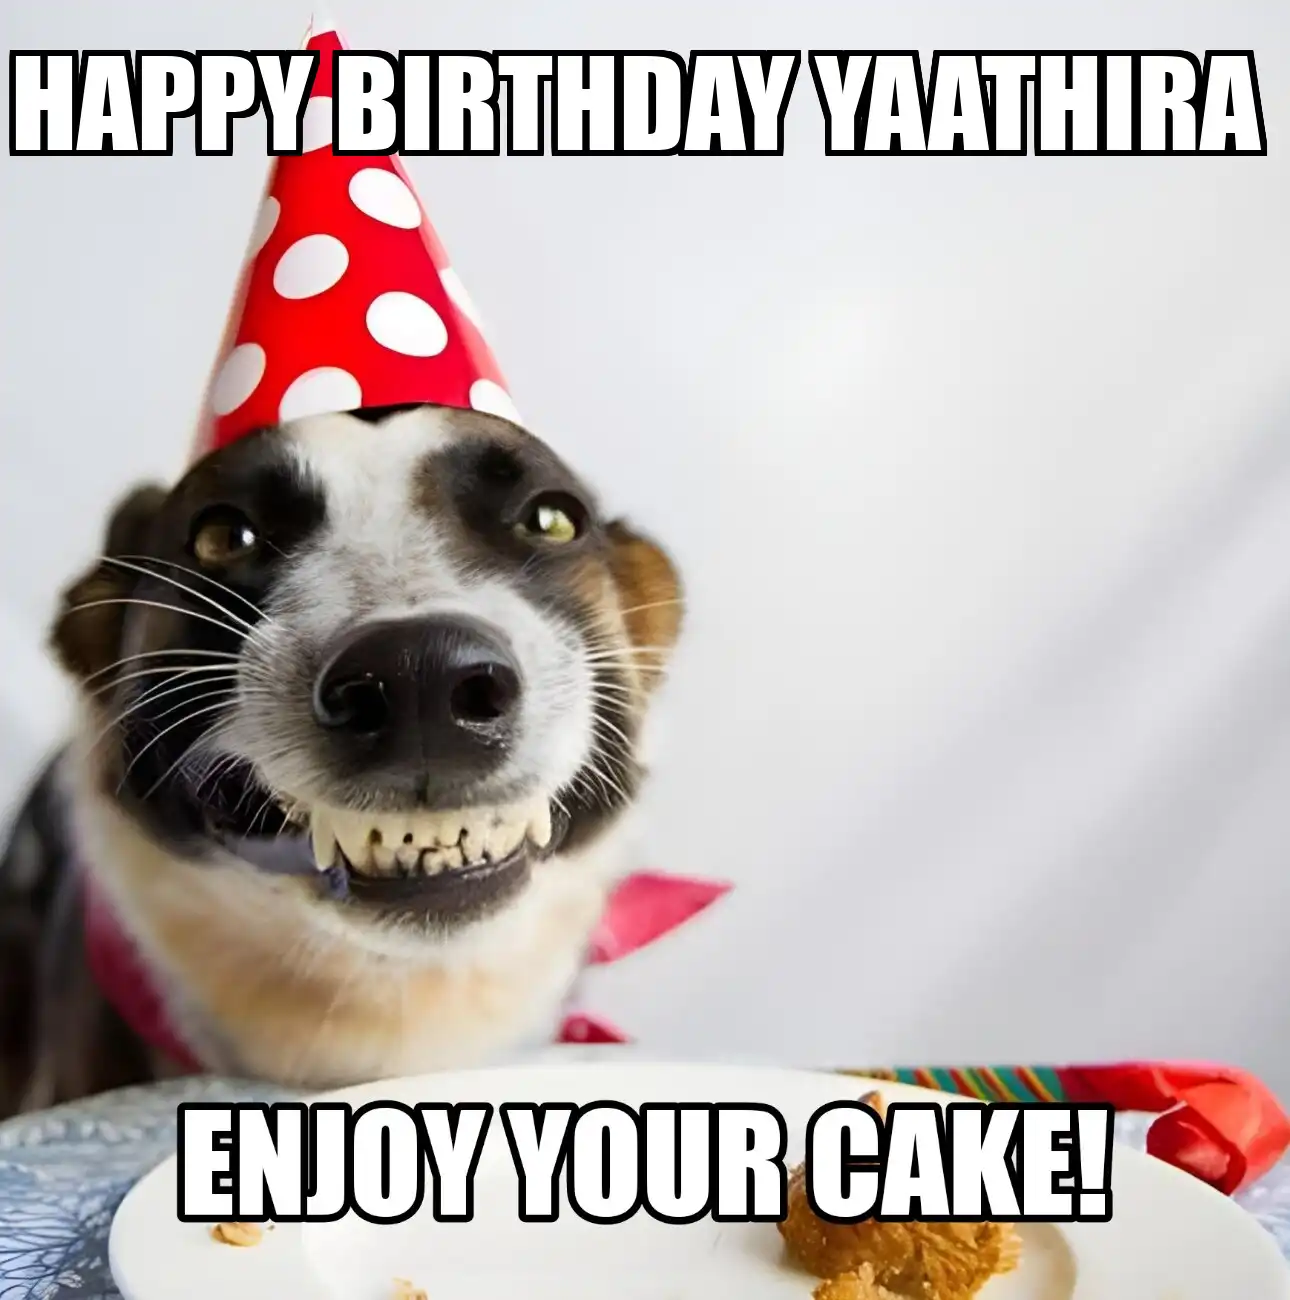 Happy Birthday Yaathira Enjoy Your Cake Dog Meme